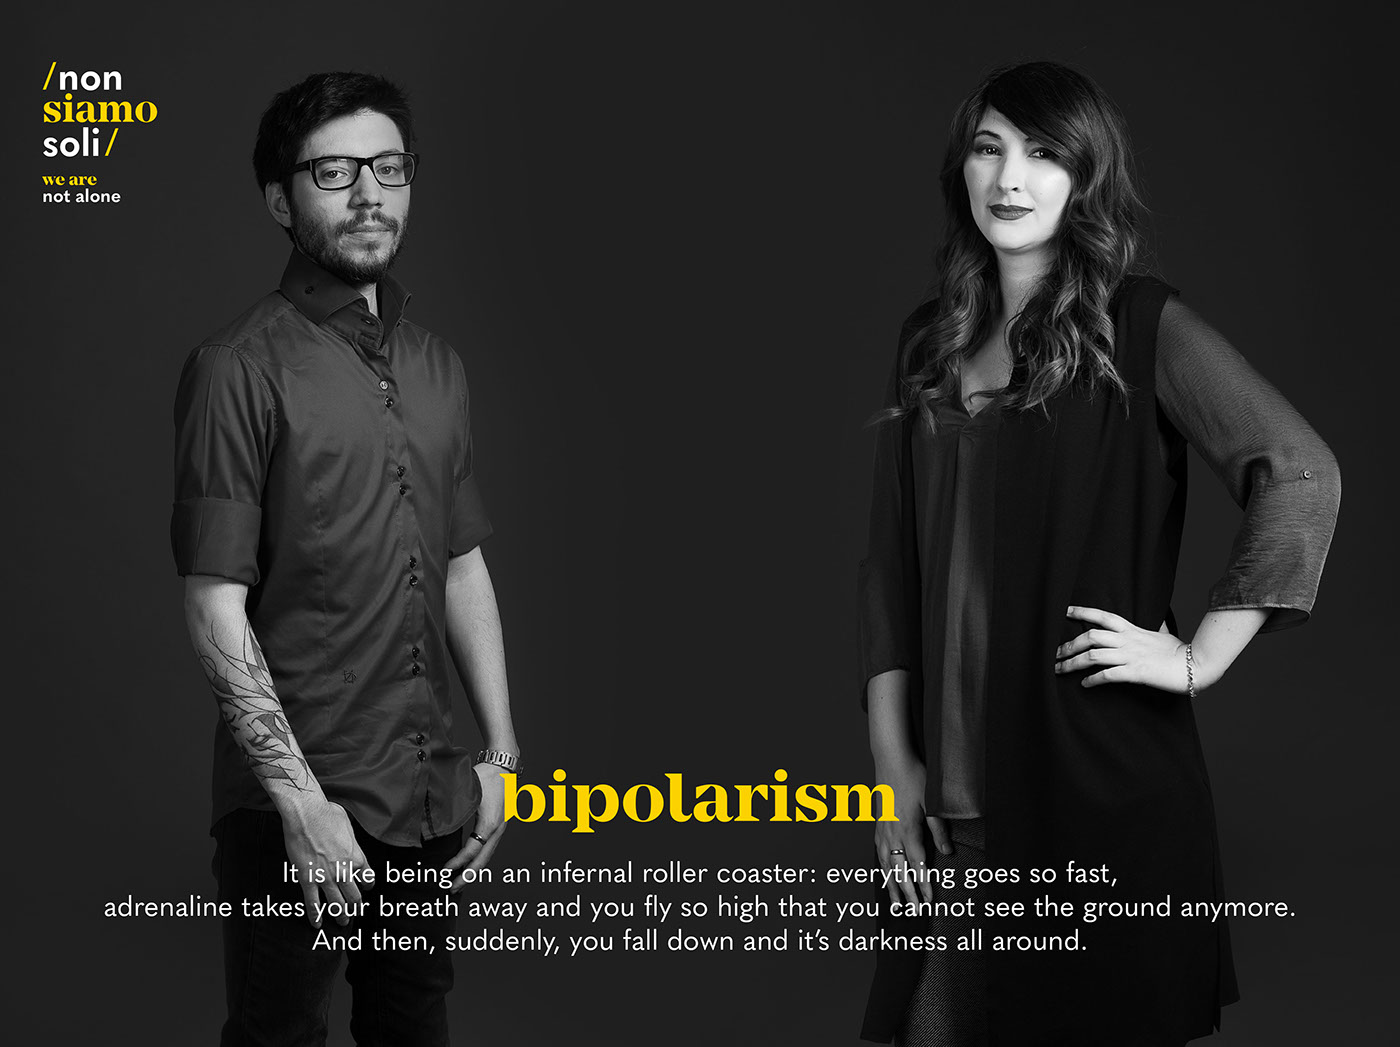 mental health mental illness Advertising  bipolar disorder anorexia NON SIAMO SOLI bipolarism